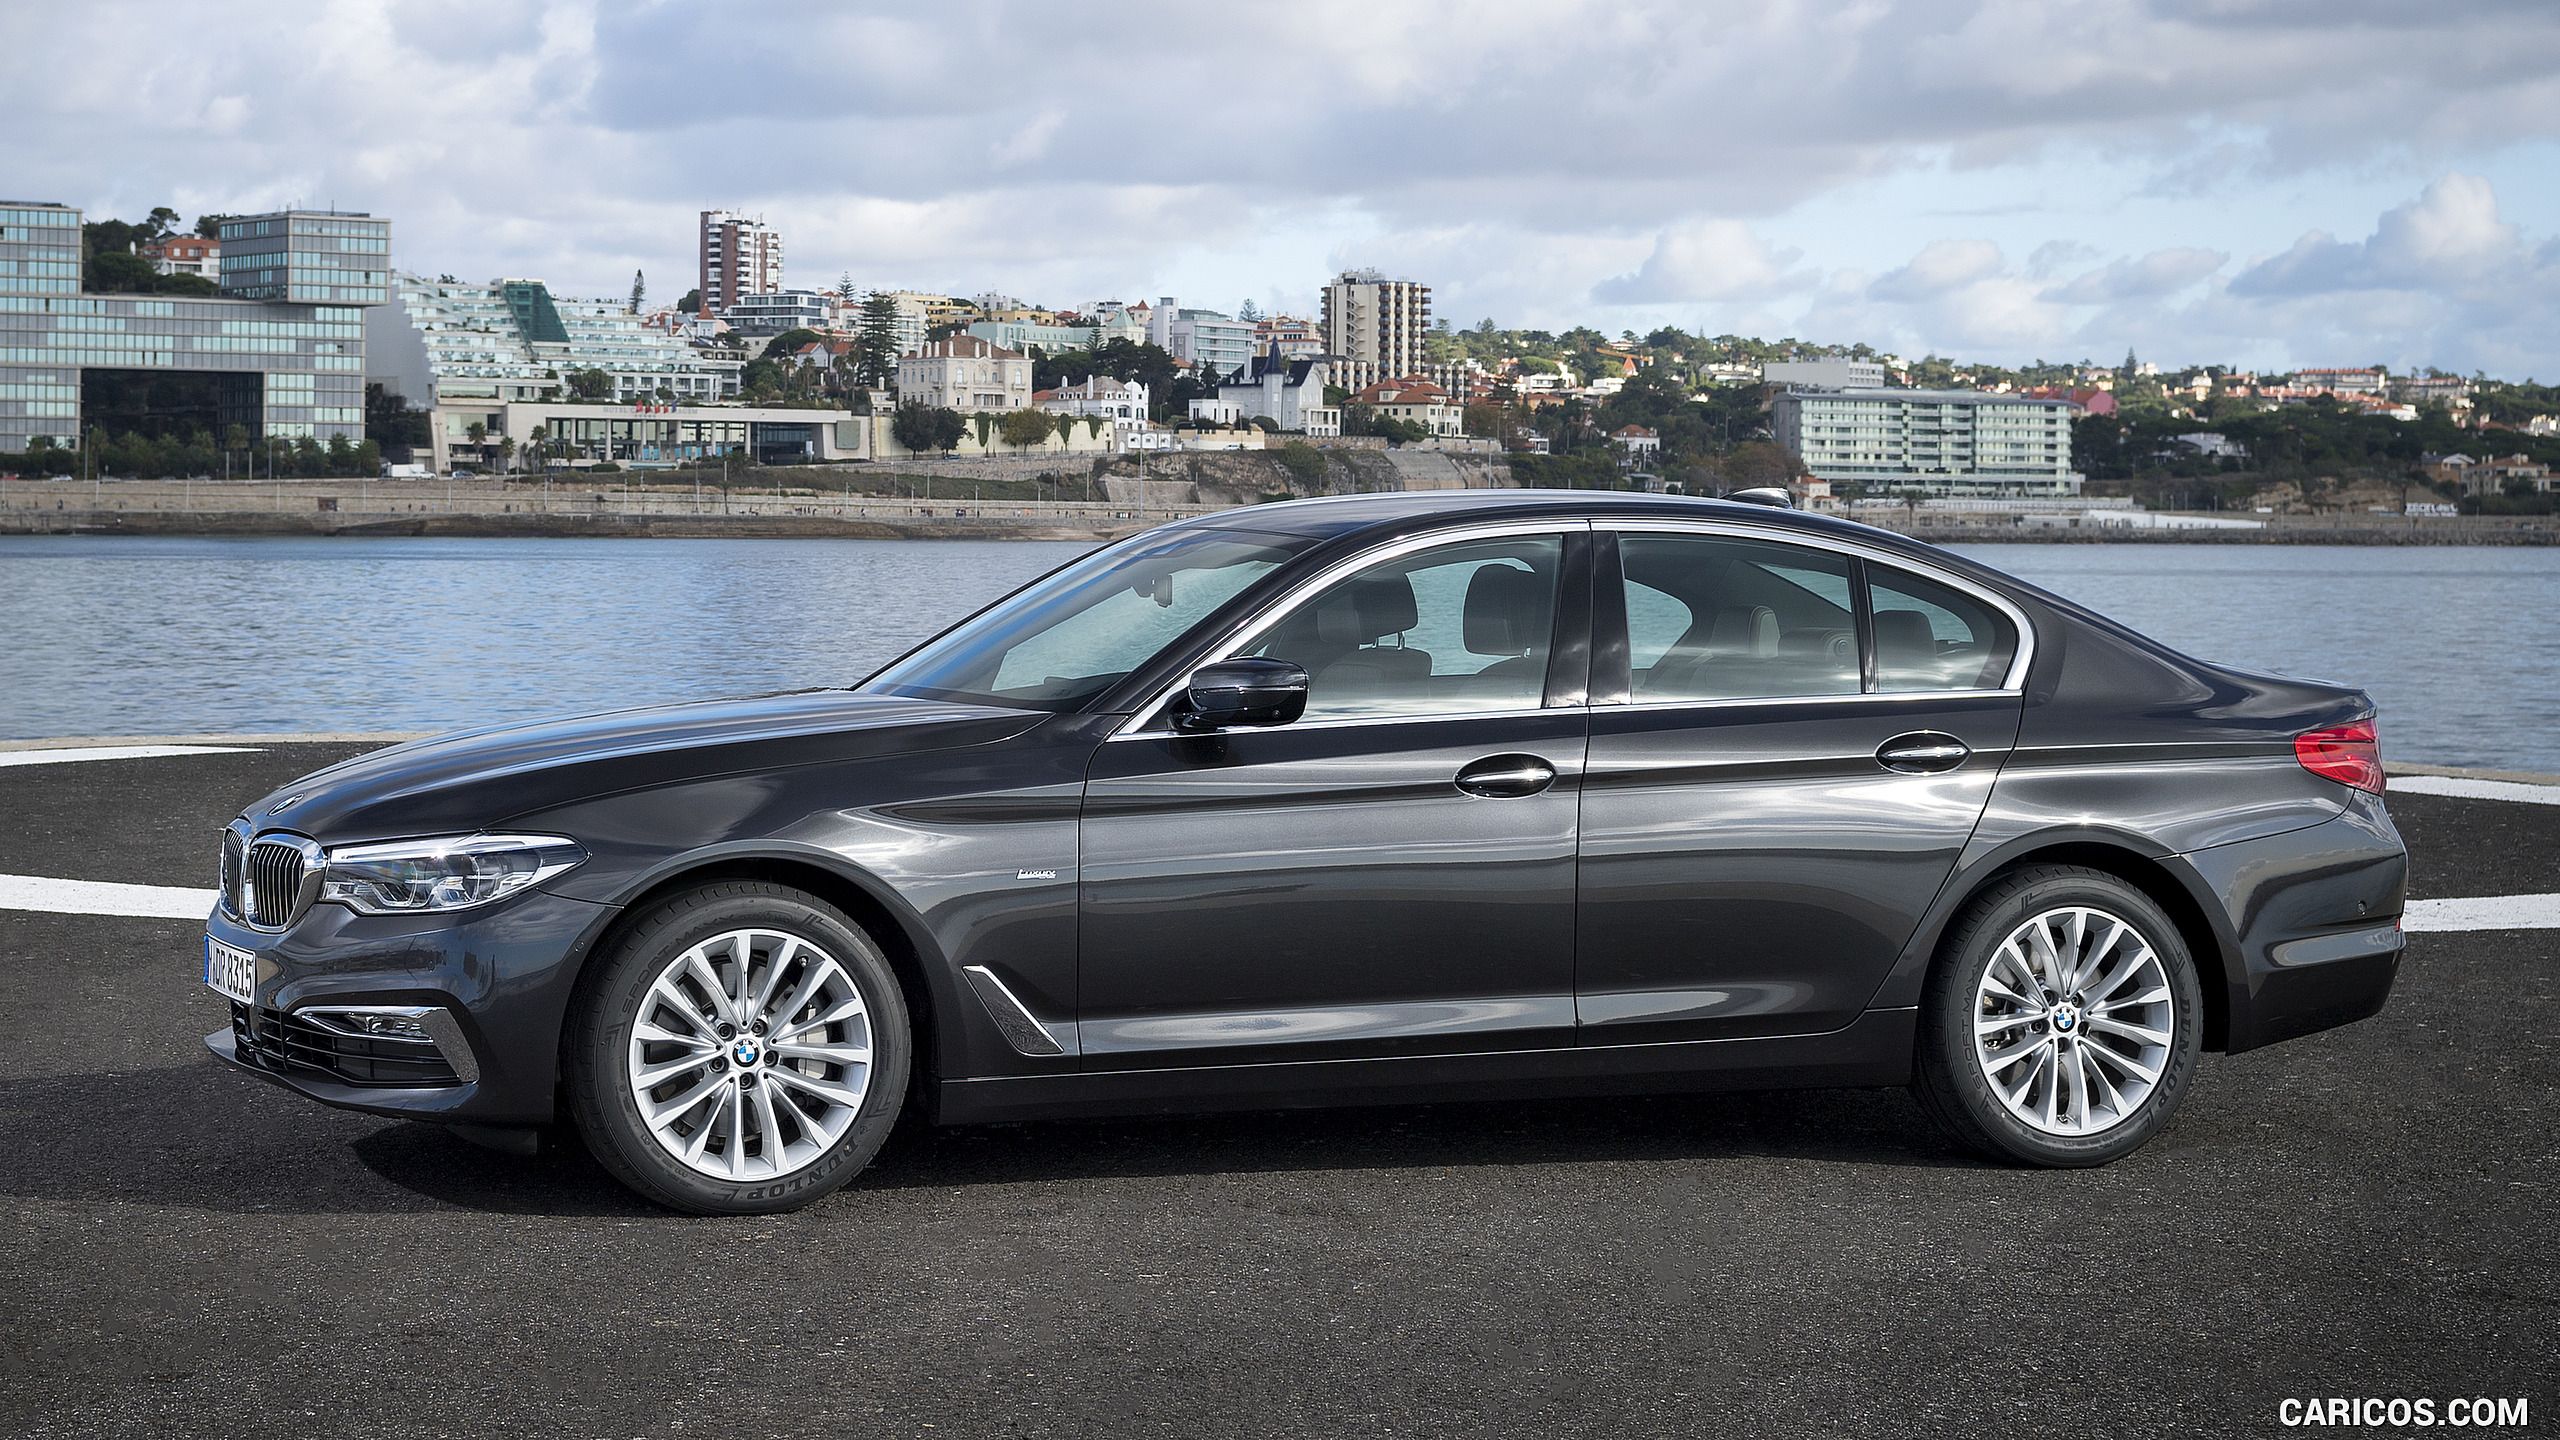 BMW 5 Series 530d XDrive Luxury Line. HD Wallpaper